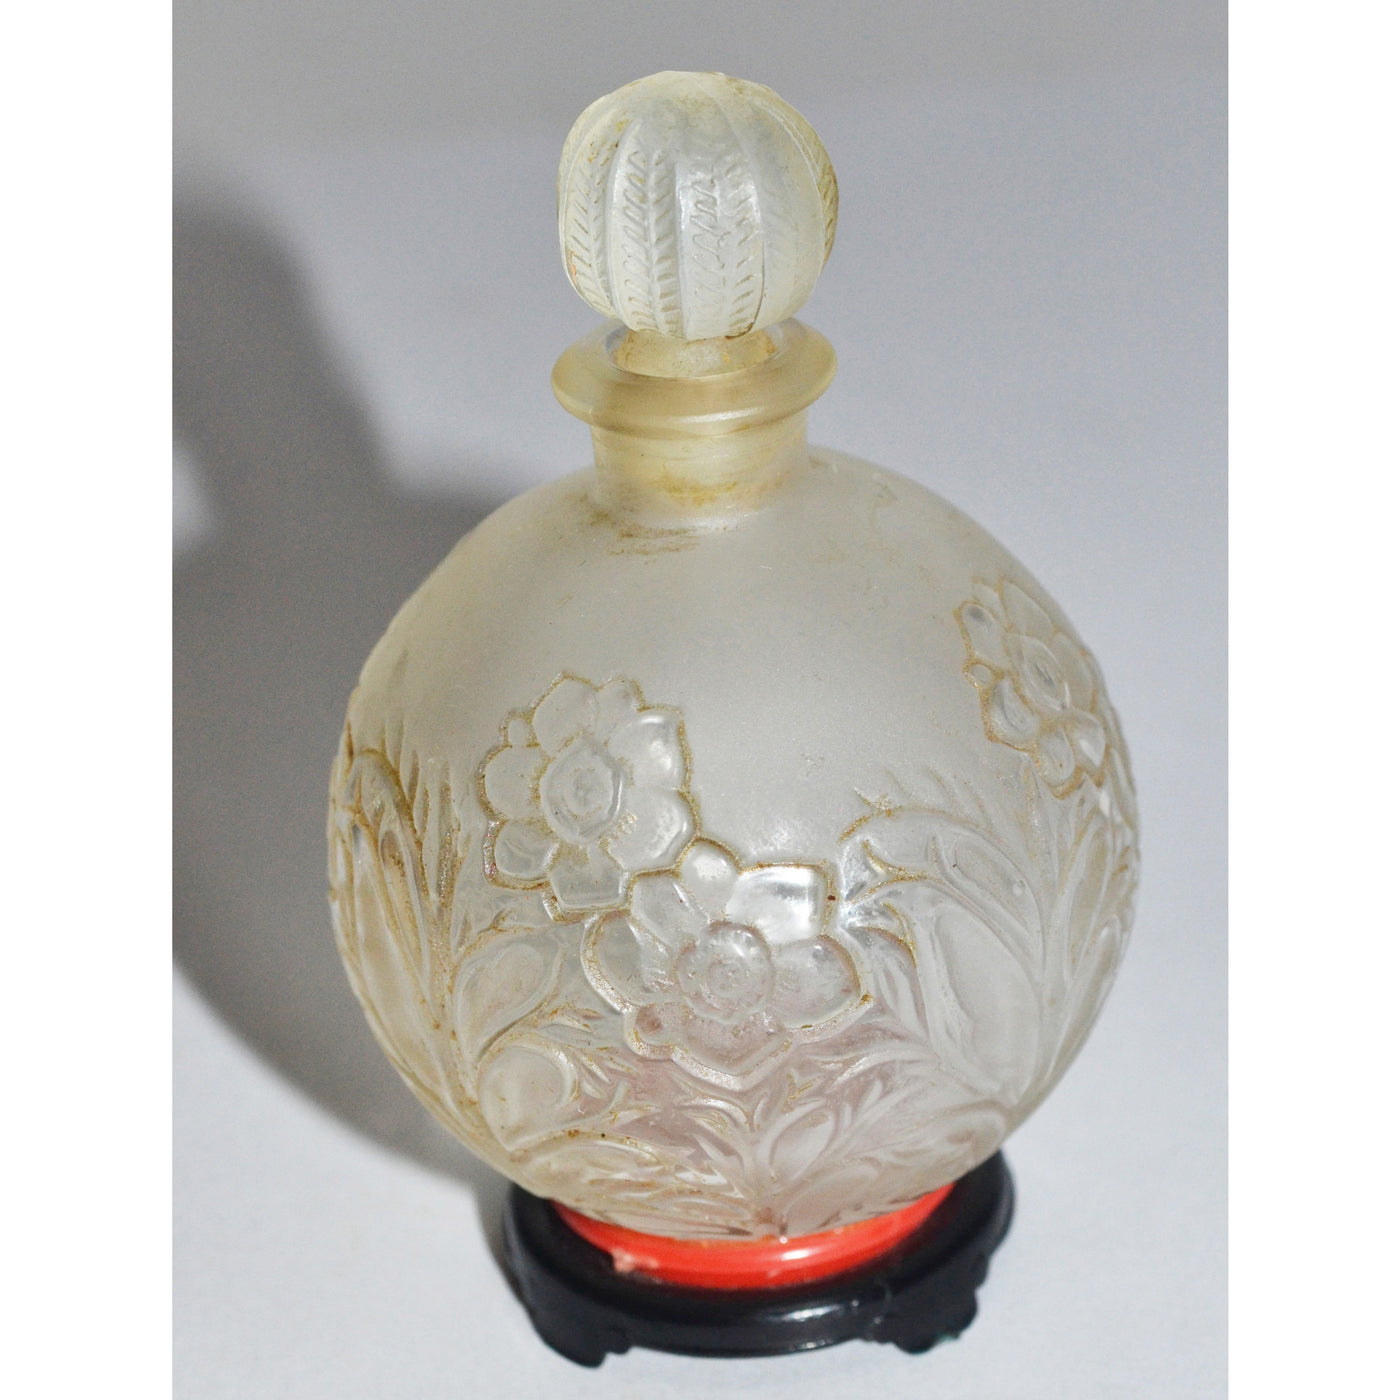 Vintage A'Suma Perfume Bottle By Coty